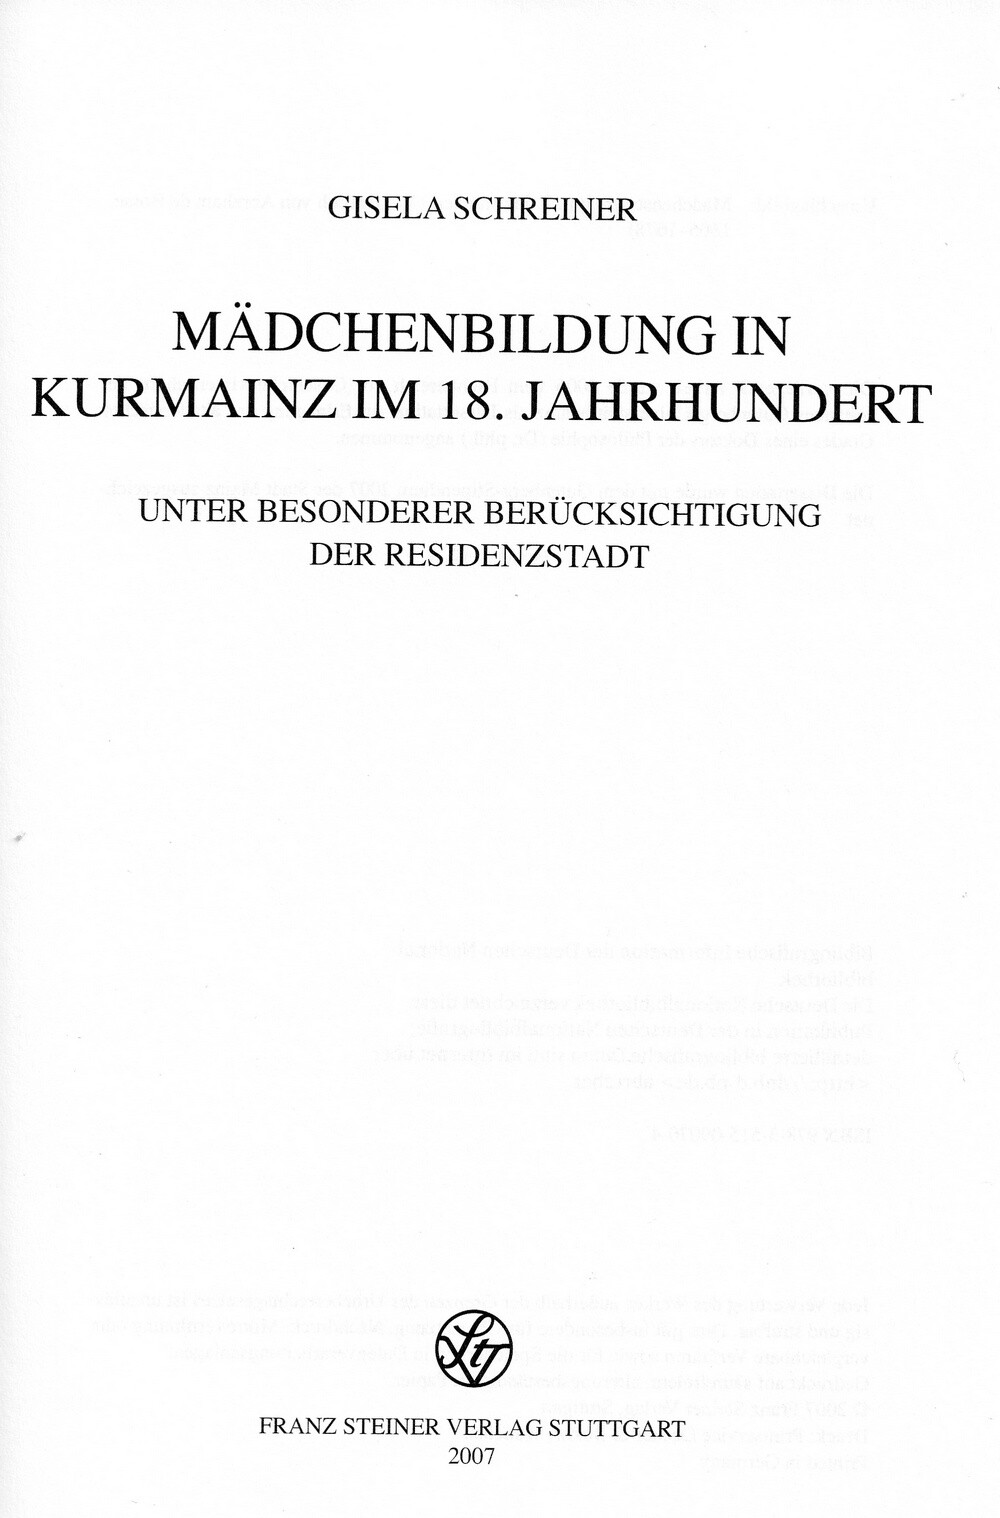 Mädchenbildung in Kurmainz im 18. Jahrhundert (Kulturverein Guntersblum CC BY-NC-SA)